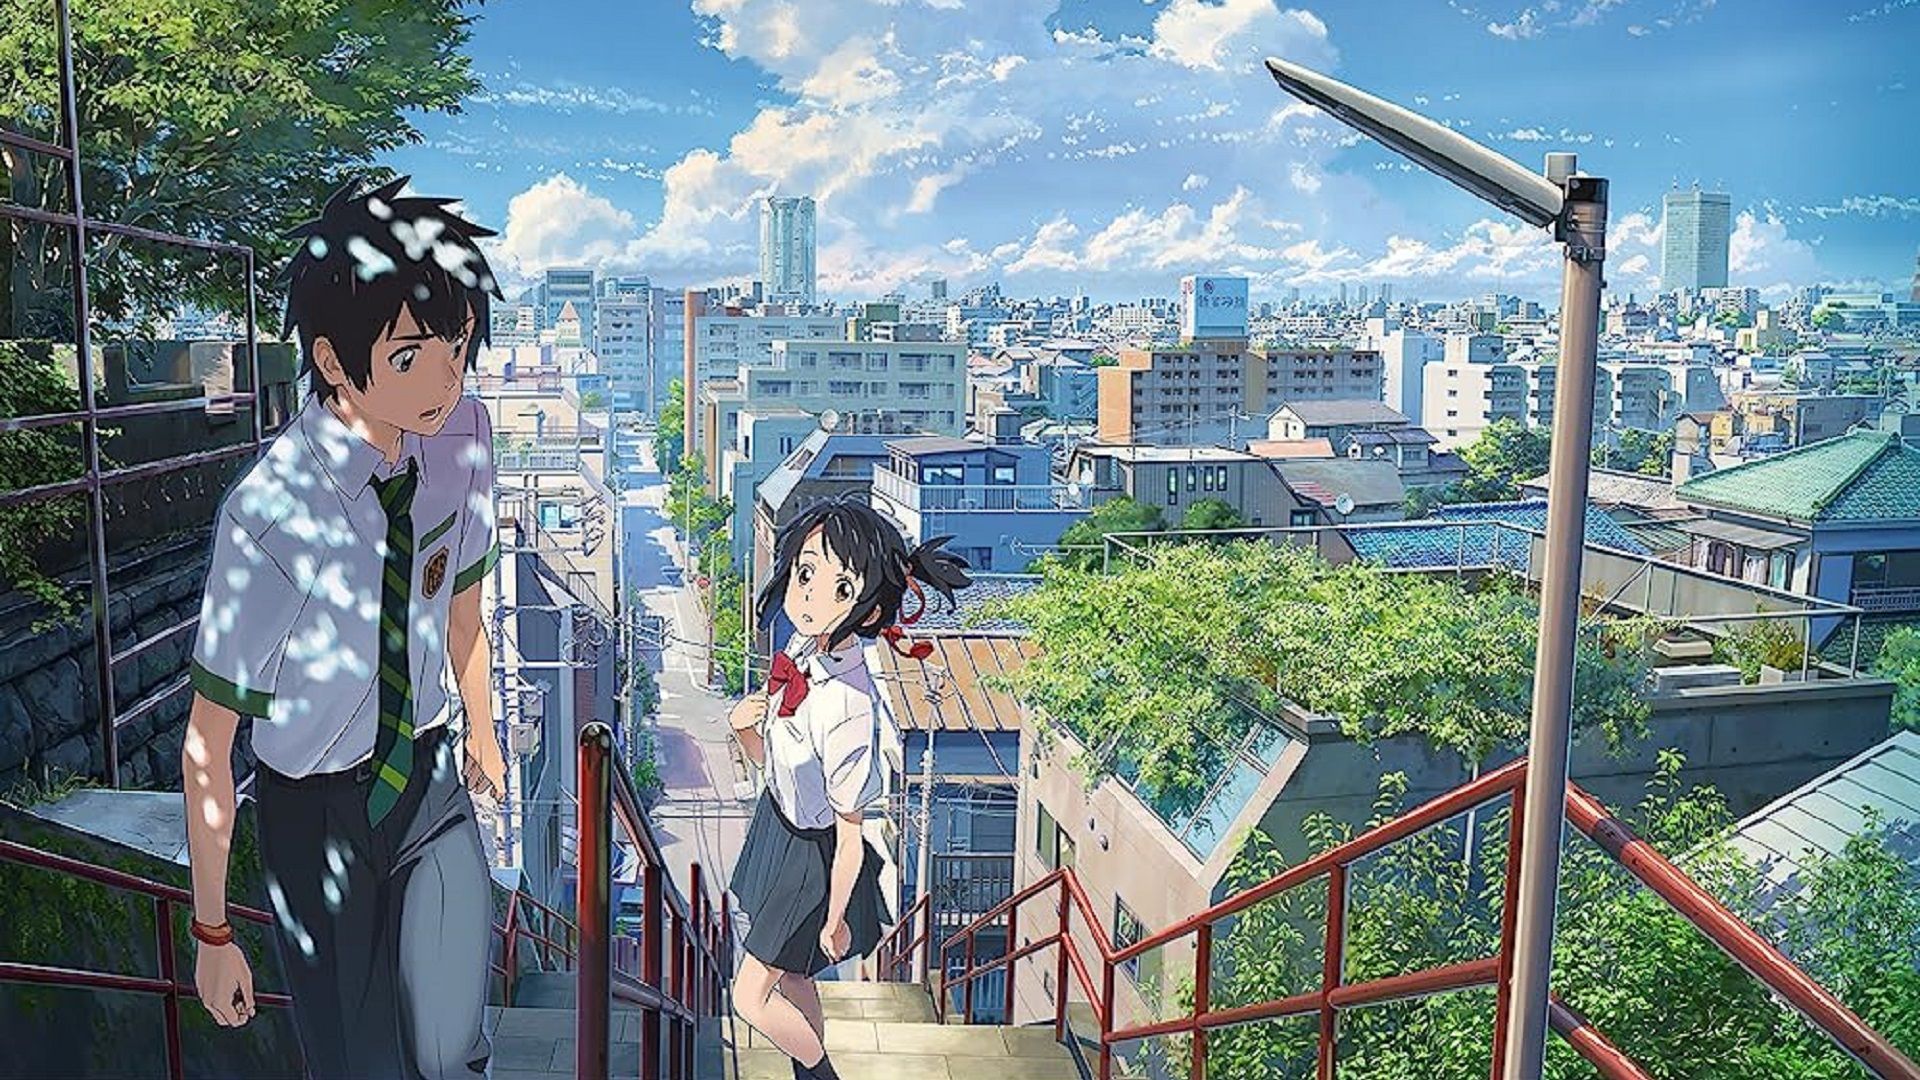 10 Best Manga and Anime Locations in Japan | Japan Wonder Travel Blog